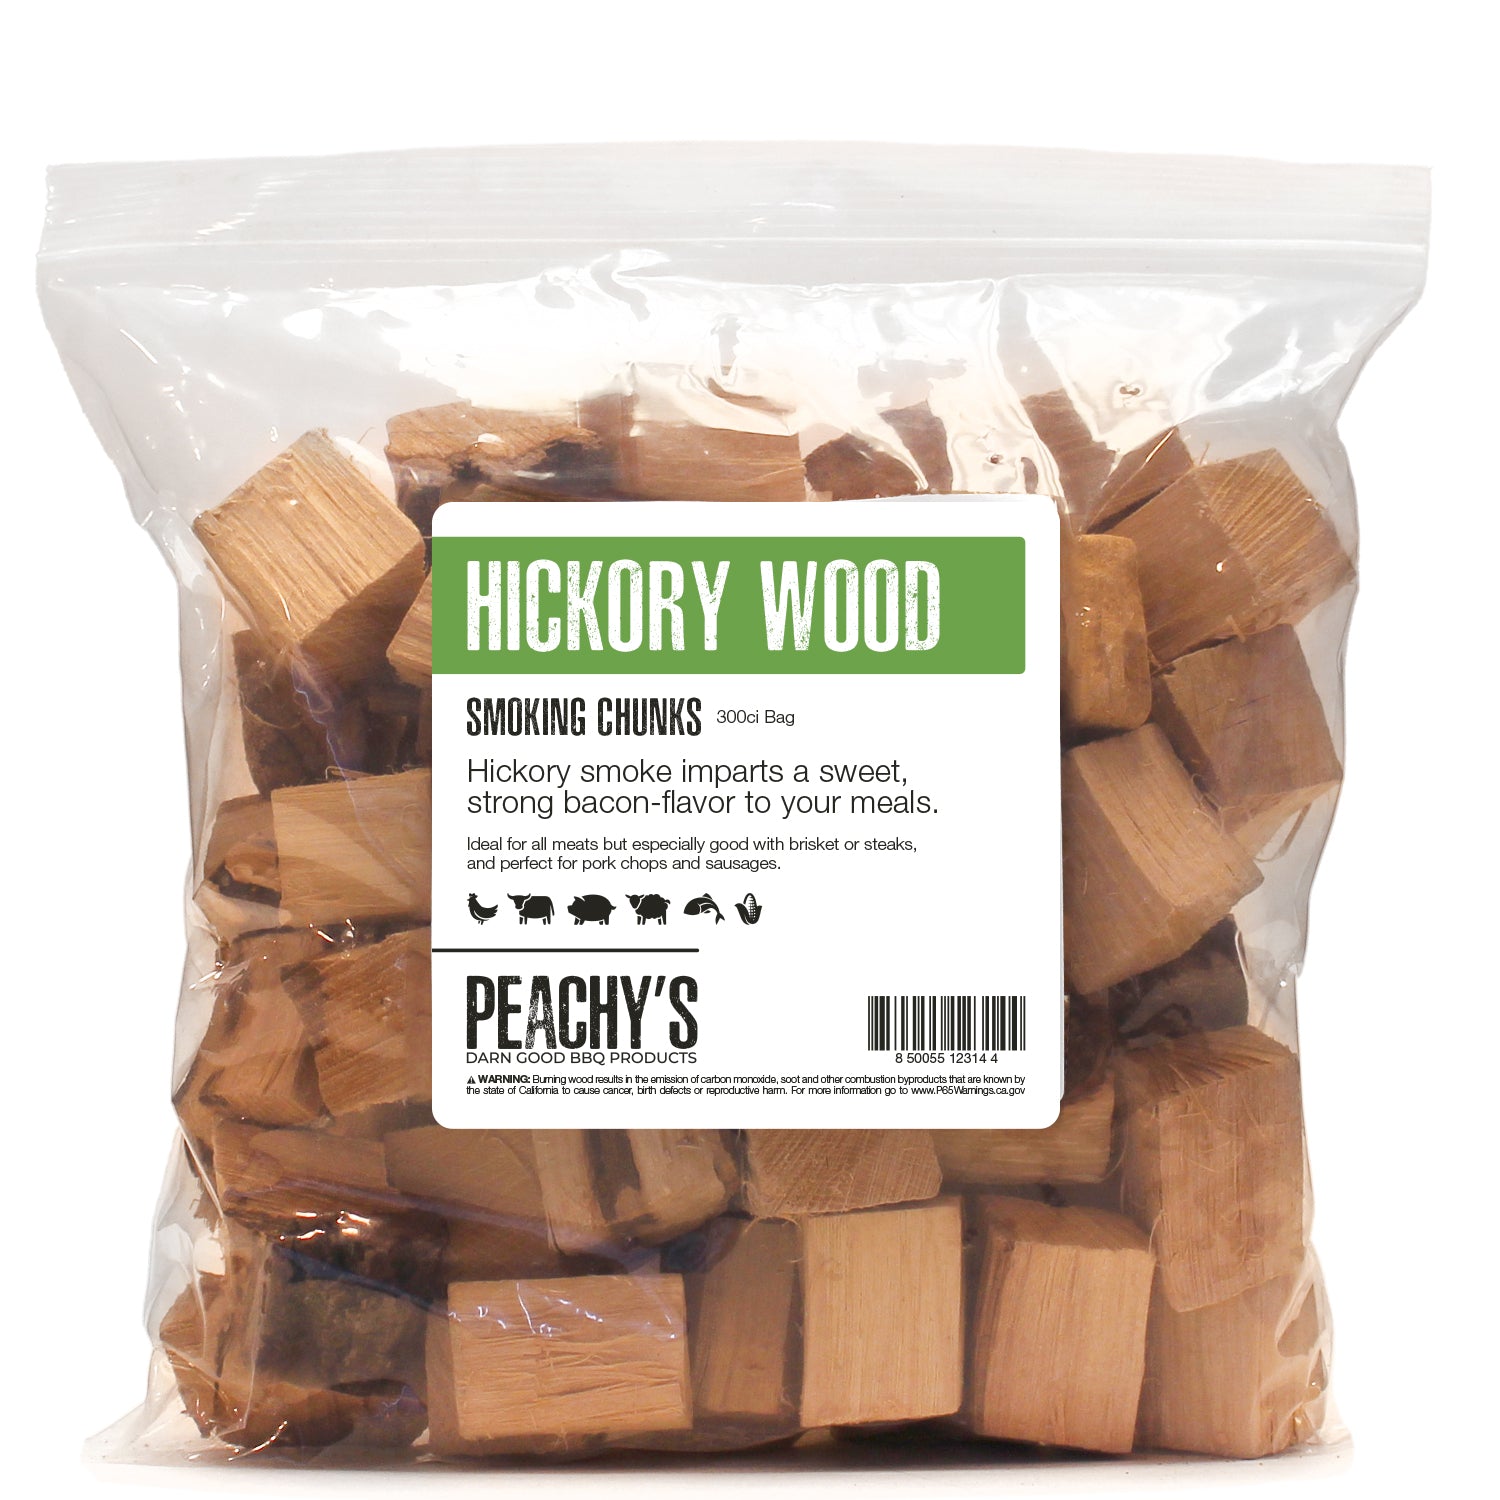 HICKORY Chunks | 300ci Bag of Premium Smoking Woods by PEACHY'S